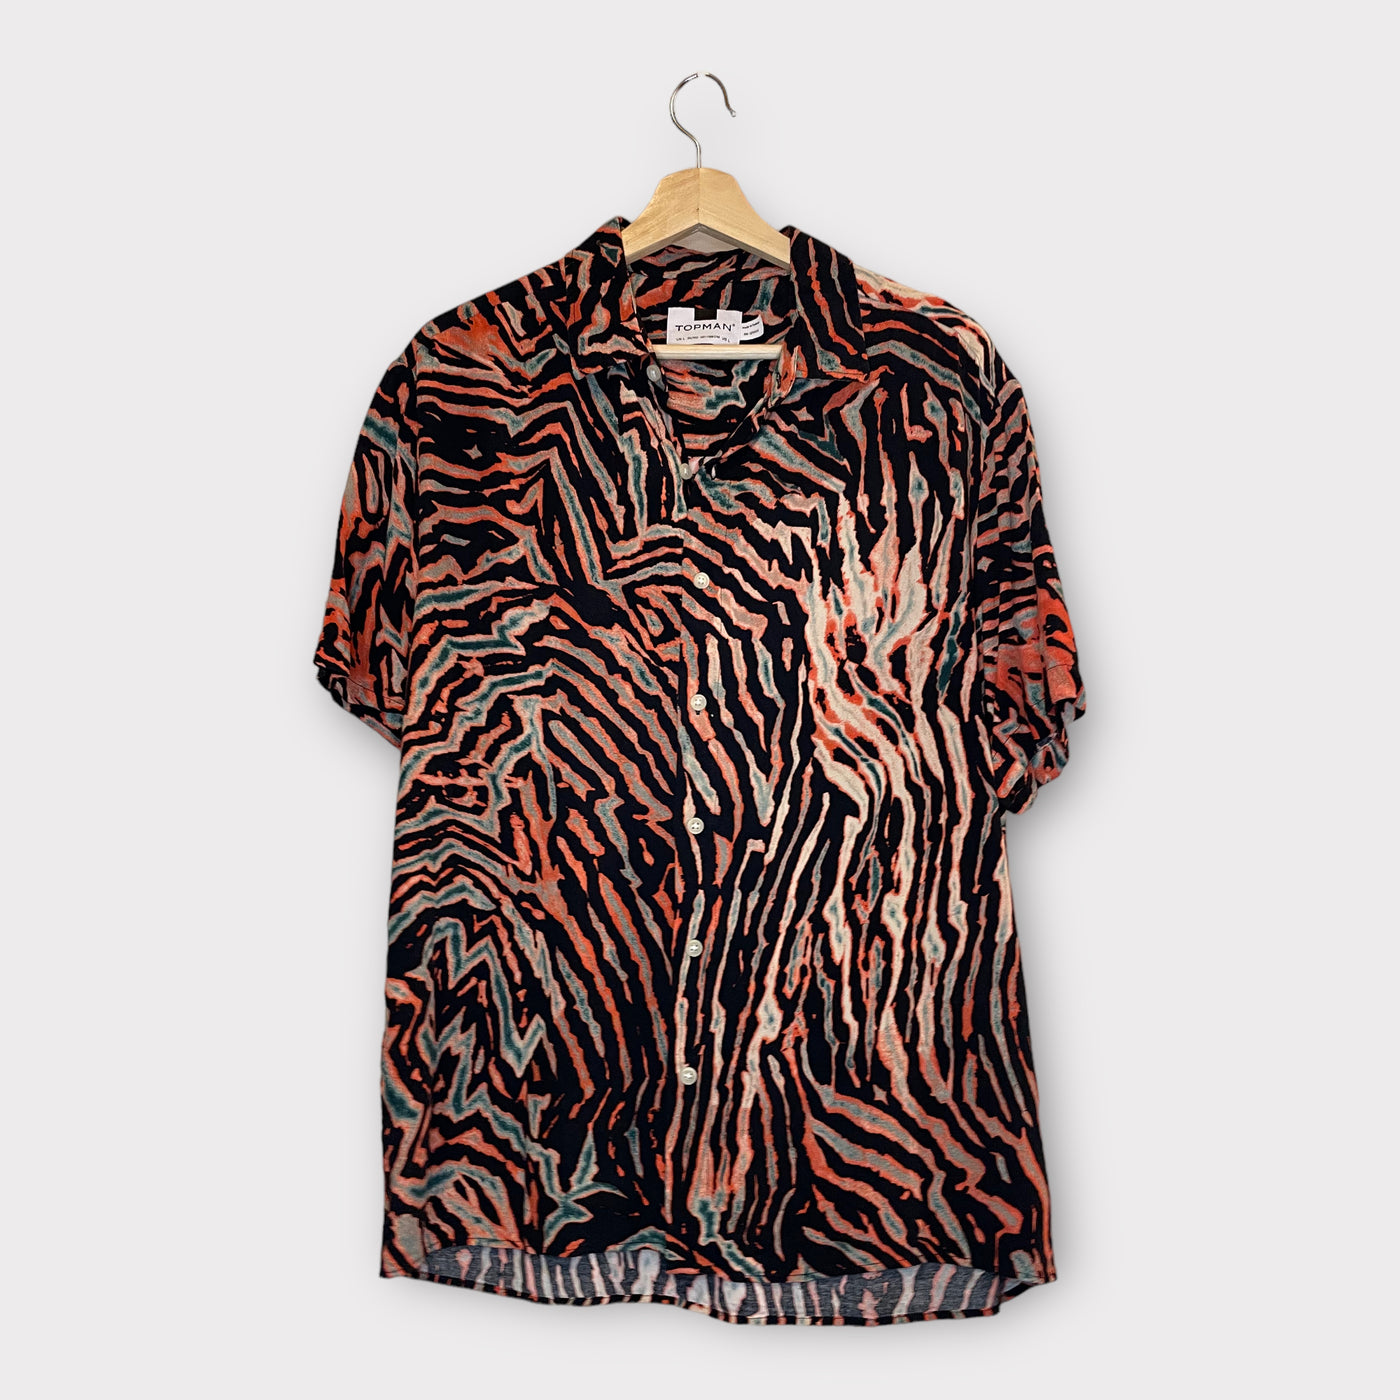 Zebra printed short sleeve shirt